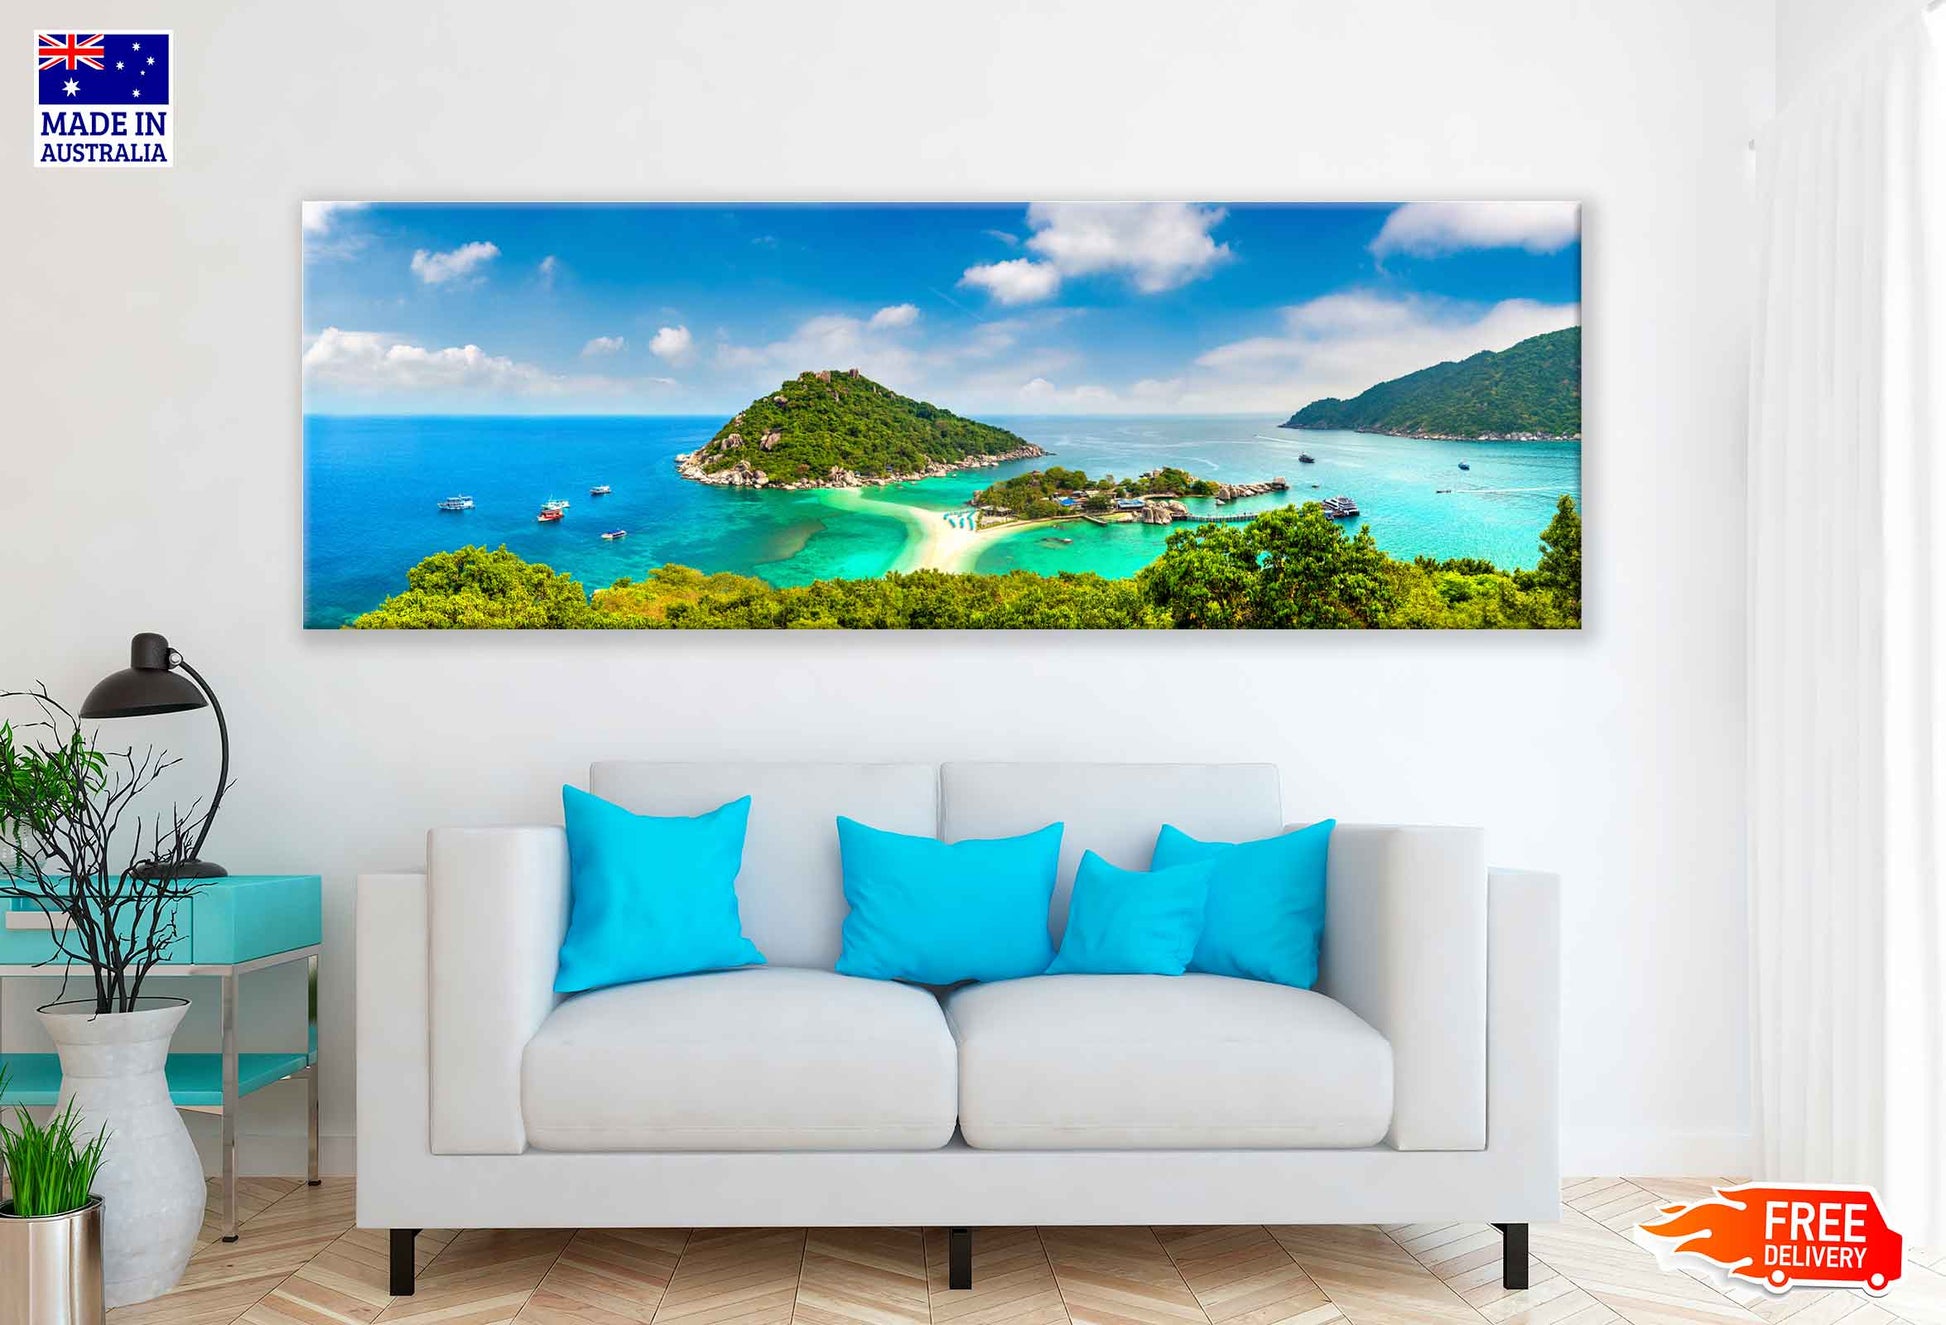 Panoramic Canvas Nang Yuan Island With Houses & Ocean High Quality 100% Australian Made Wall Canvas Print Ready to Hang